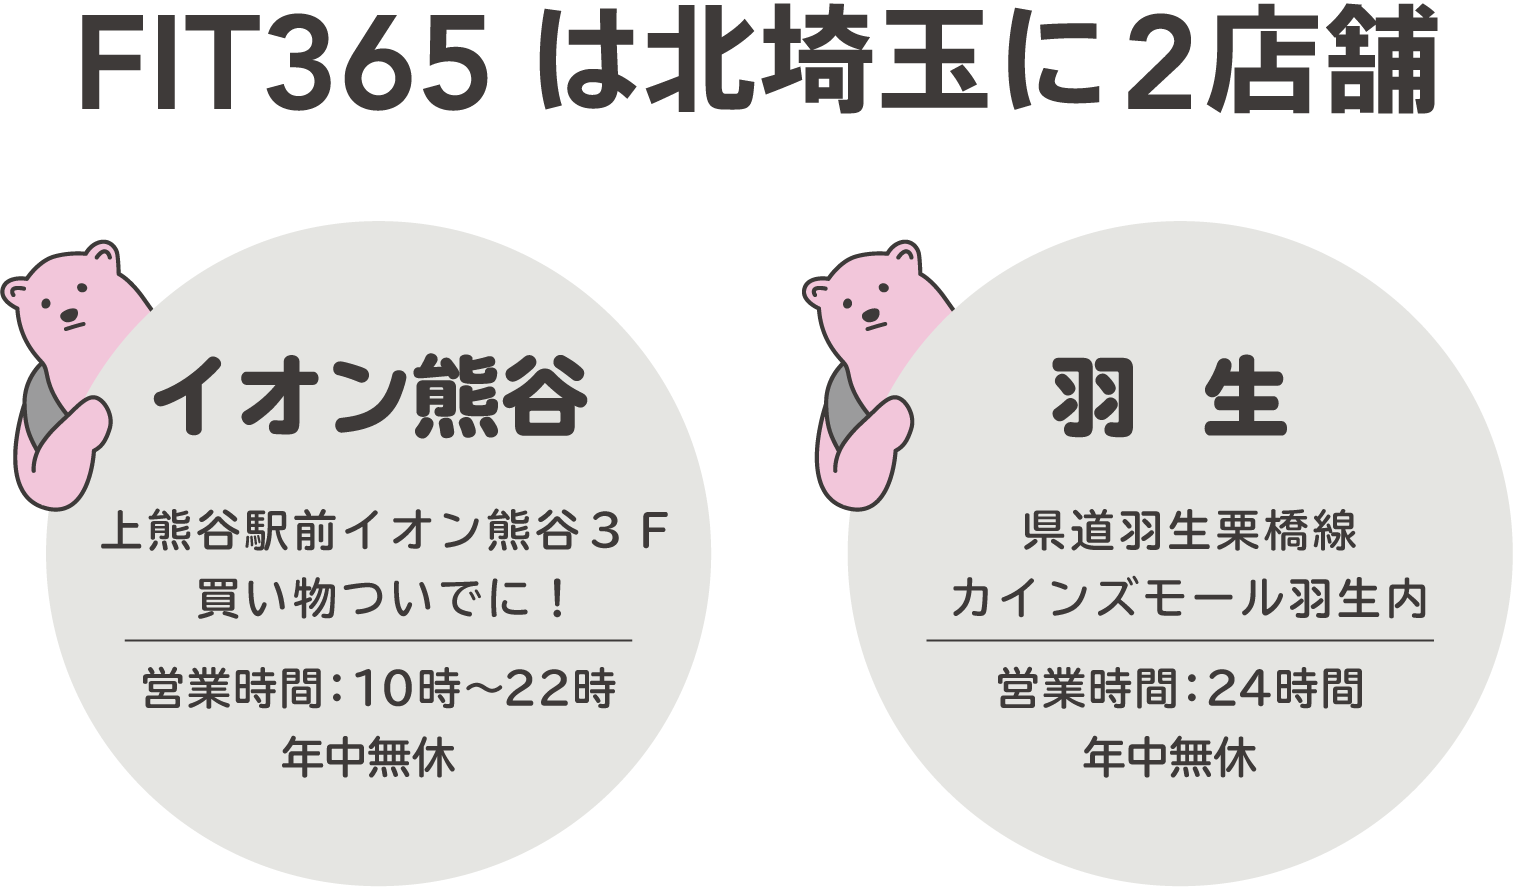 FIT365は北埼玉に3店舗！